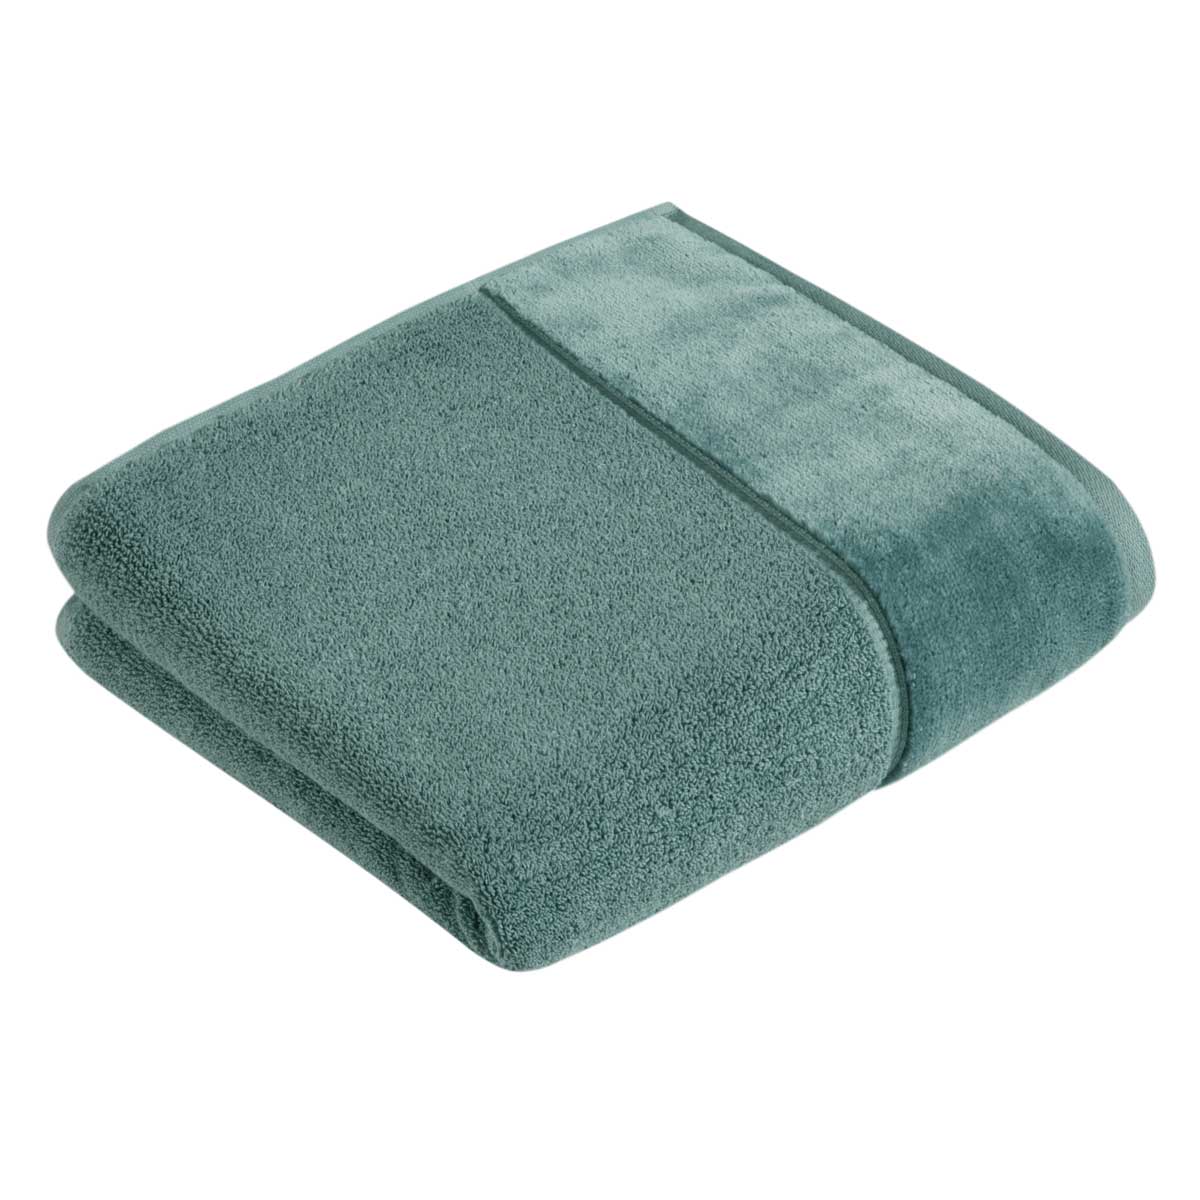 Полотенце махровое Vossen Pure 30x30см, цвет серо-голубой полотенце совершенство серо голубой р 50х90